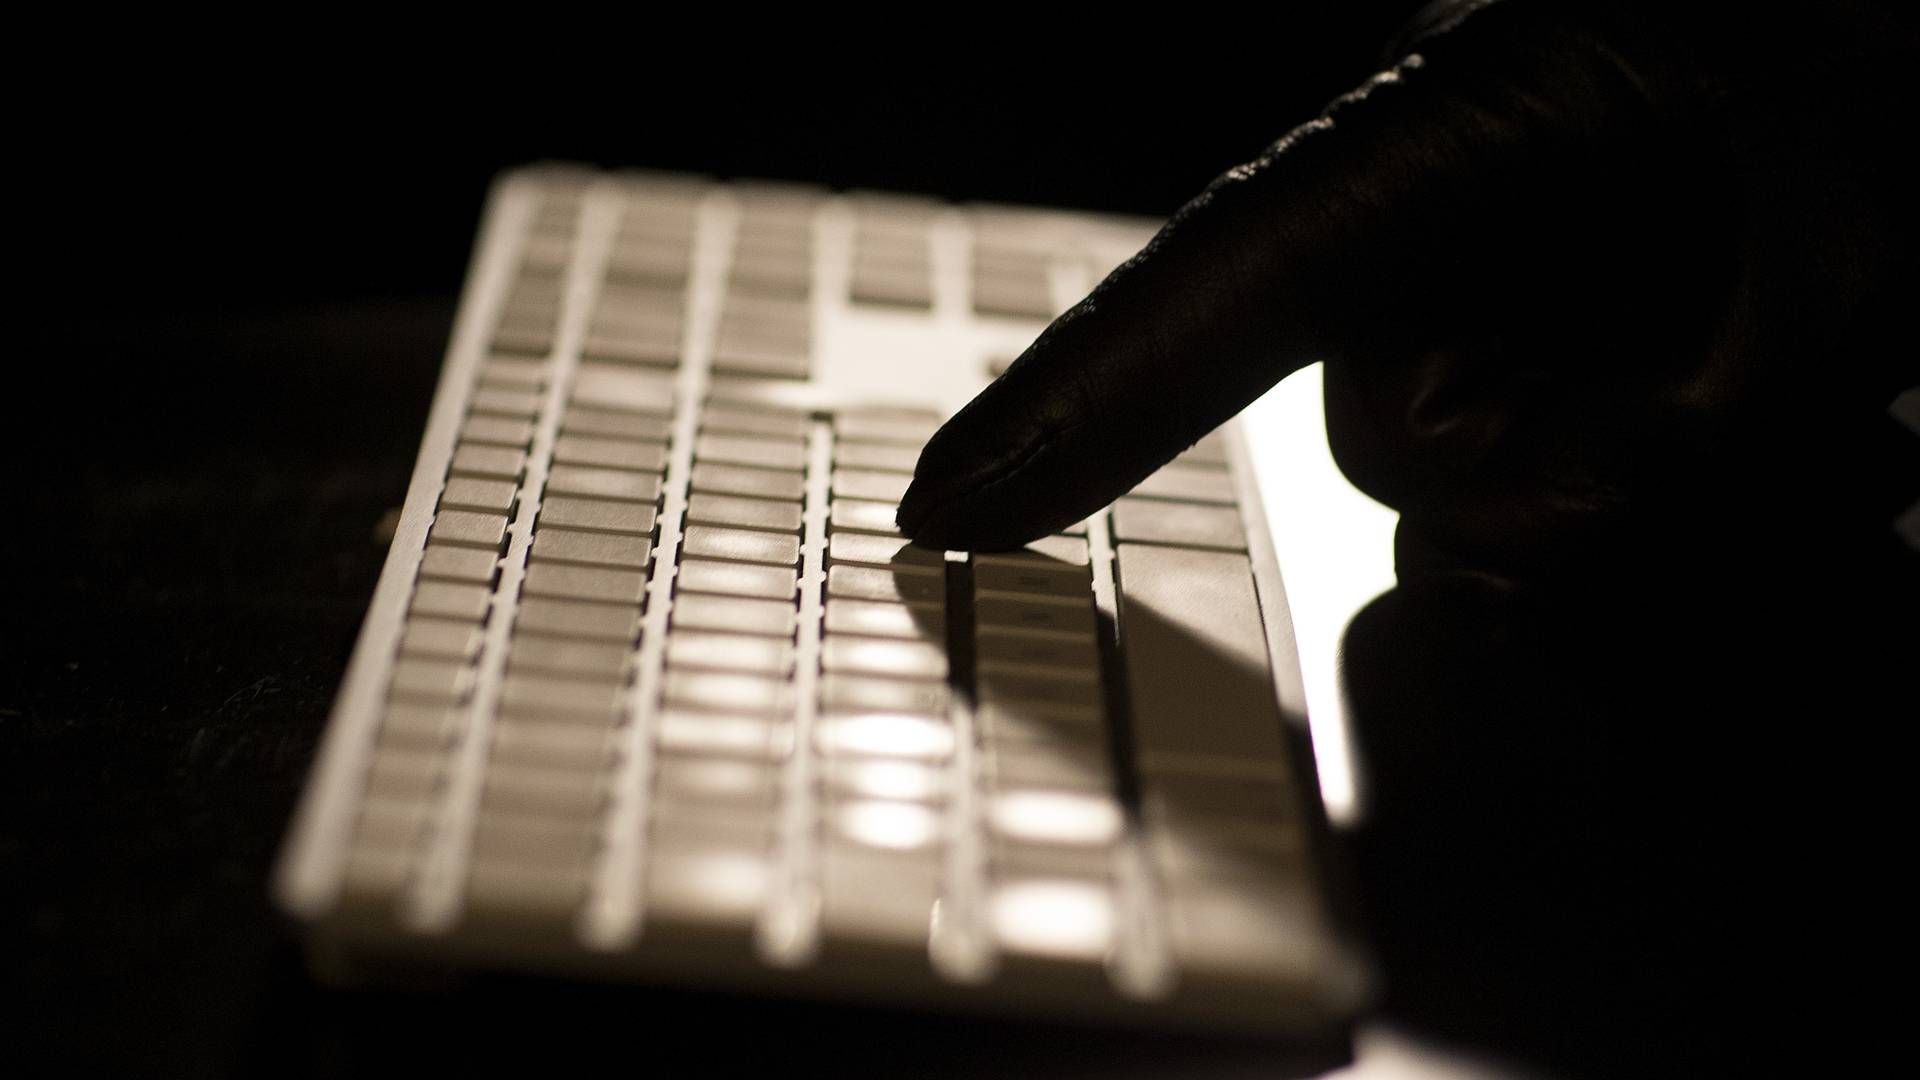 Hackere slår til mod den britiske advokatbranche. Heller ikke herhjemme er cyberkriminalitet uset. | Foto: Finn Frandsen